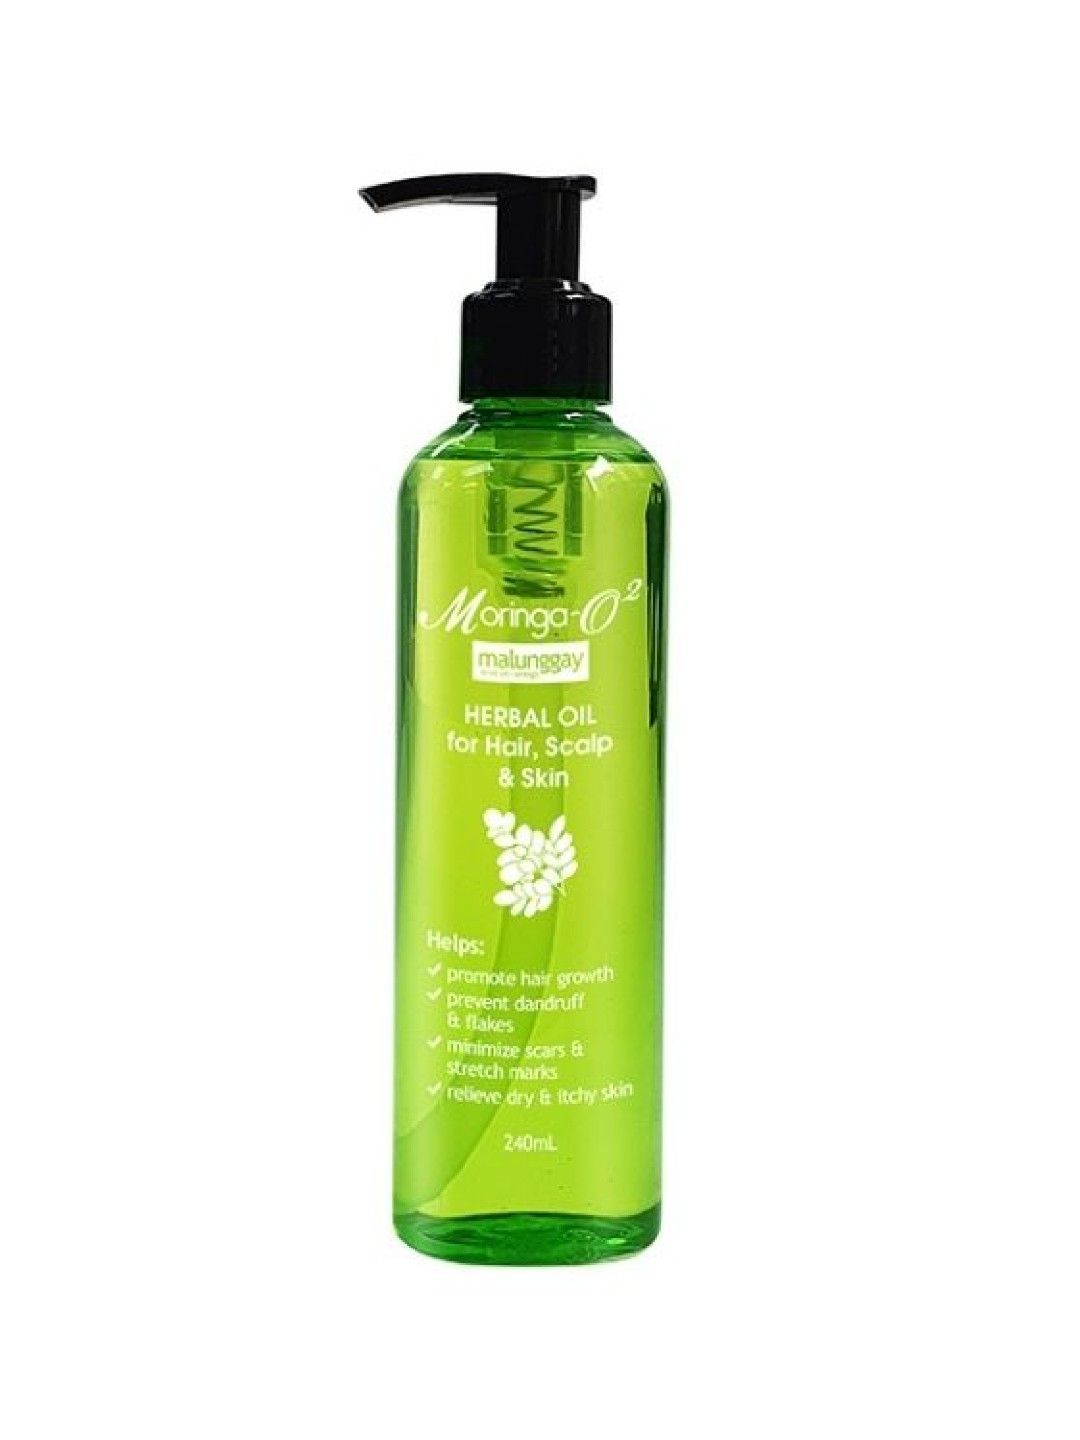 Moringa-O2 Moisturizing Therapy Oil for Hair, Scalp and Skin (240ml)